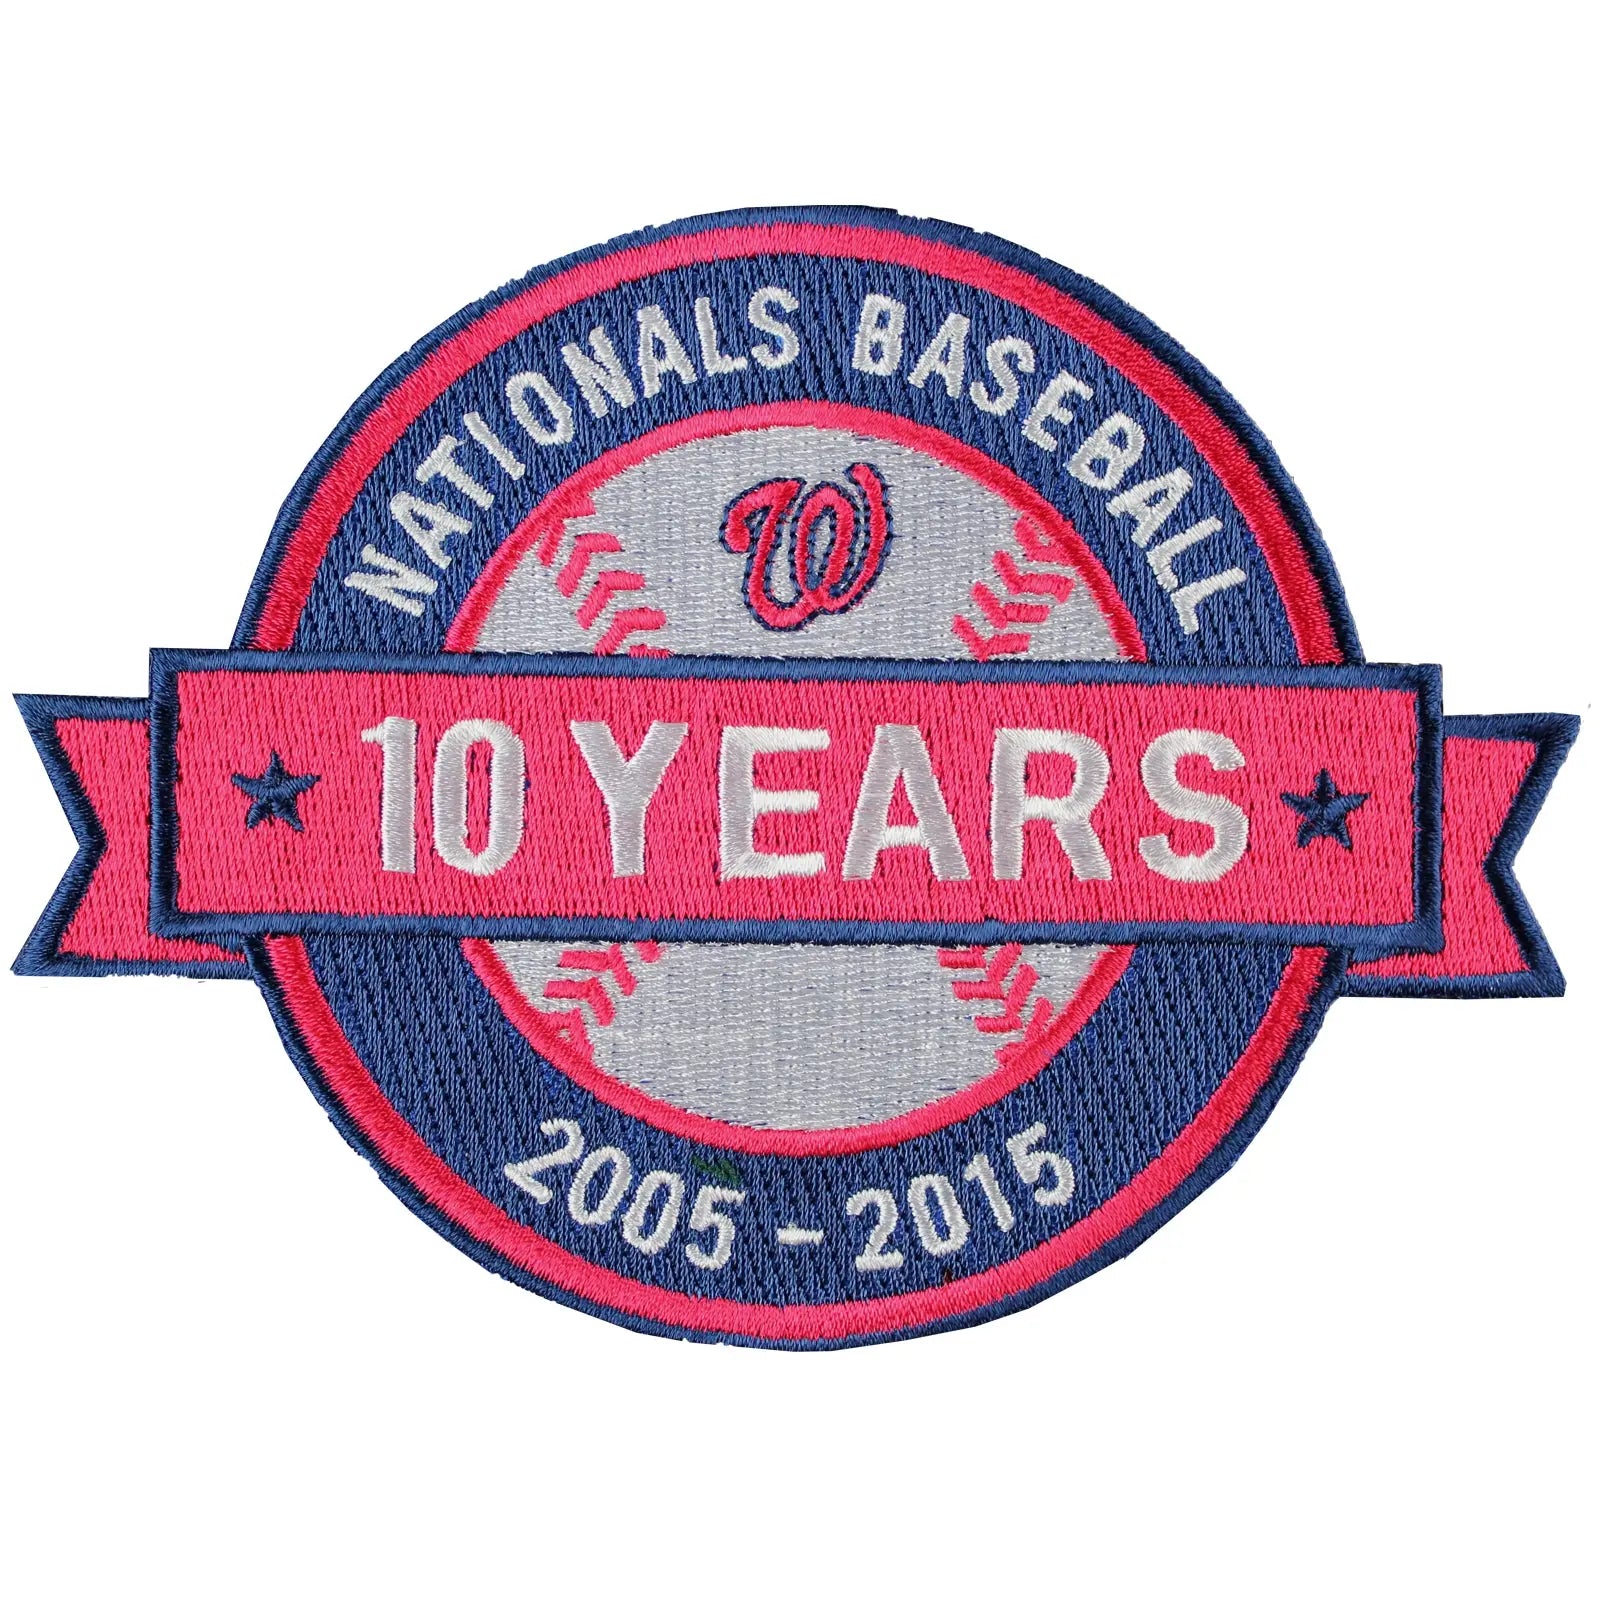 2015 Washington Nationals Baseball 10th Anniversary Years Jersey Sleeve Patch 